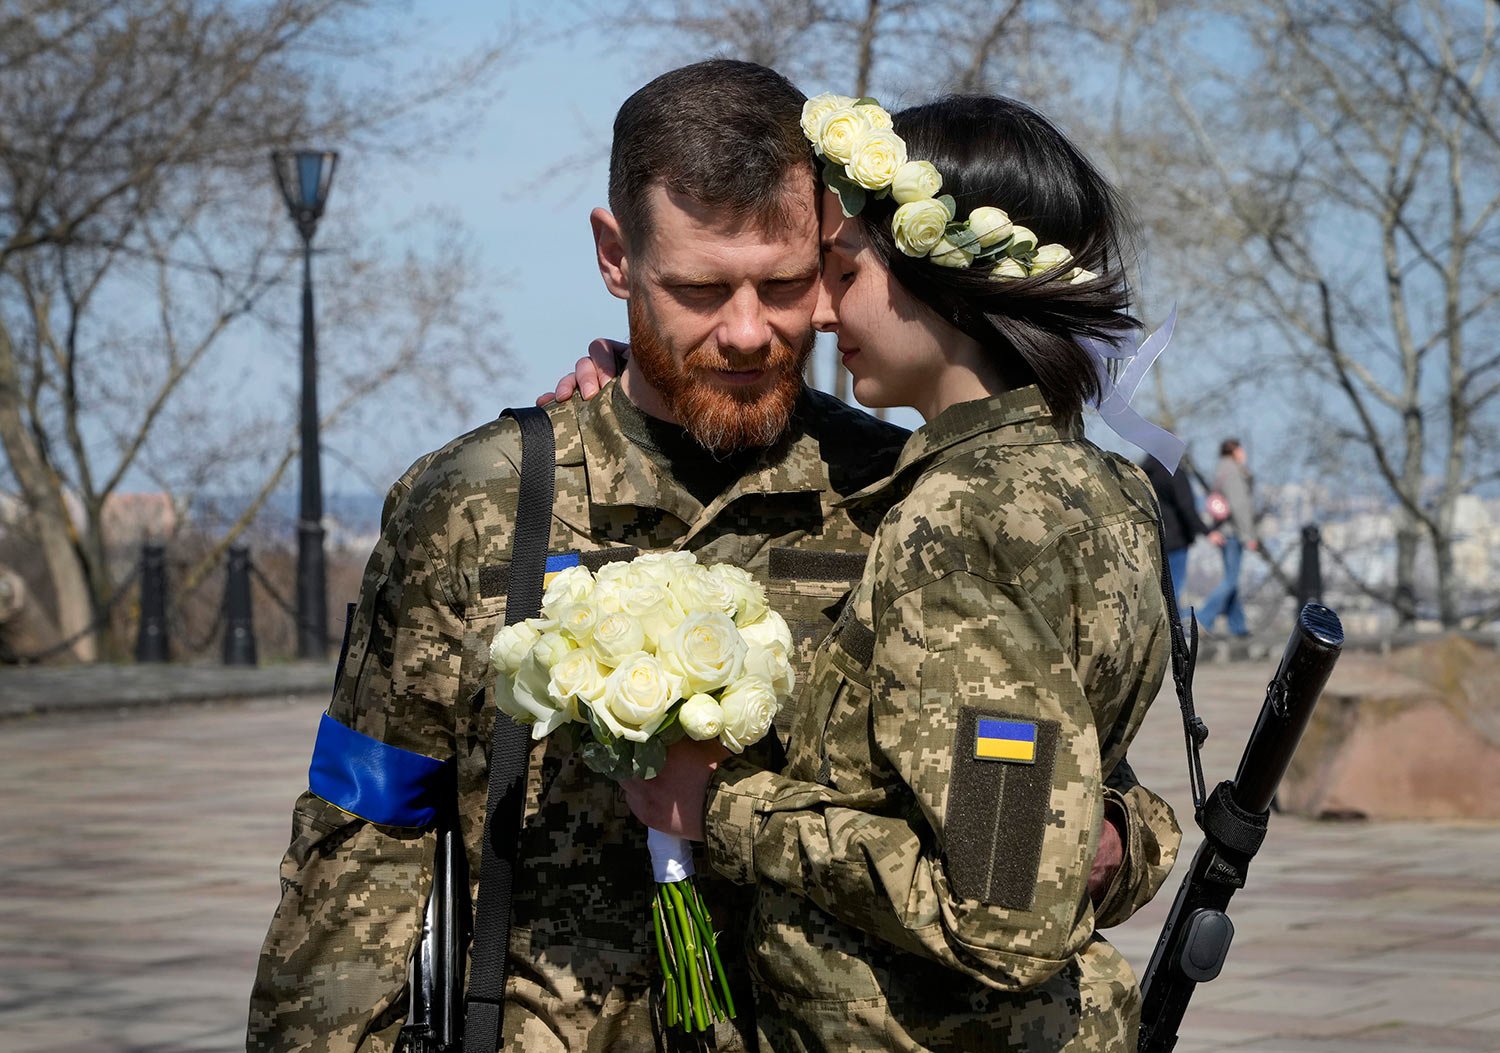  Ukrainian soldiers Anastasia and Vyacheslav embrace prior to their wedding ceremony in a city park in Kyiv, Ukraine, Thursday, April 7, 2022. (AP Photo/Efrem Lukatsky) 